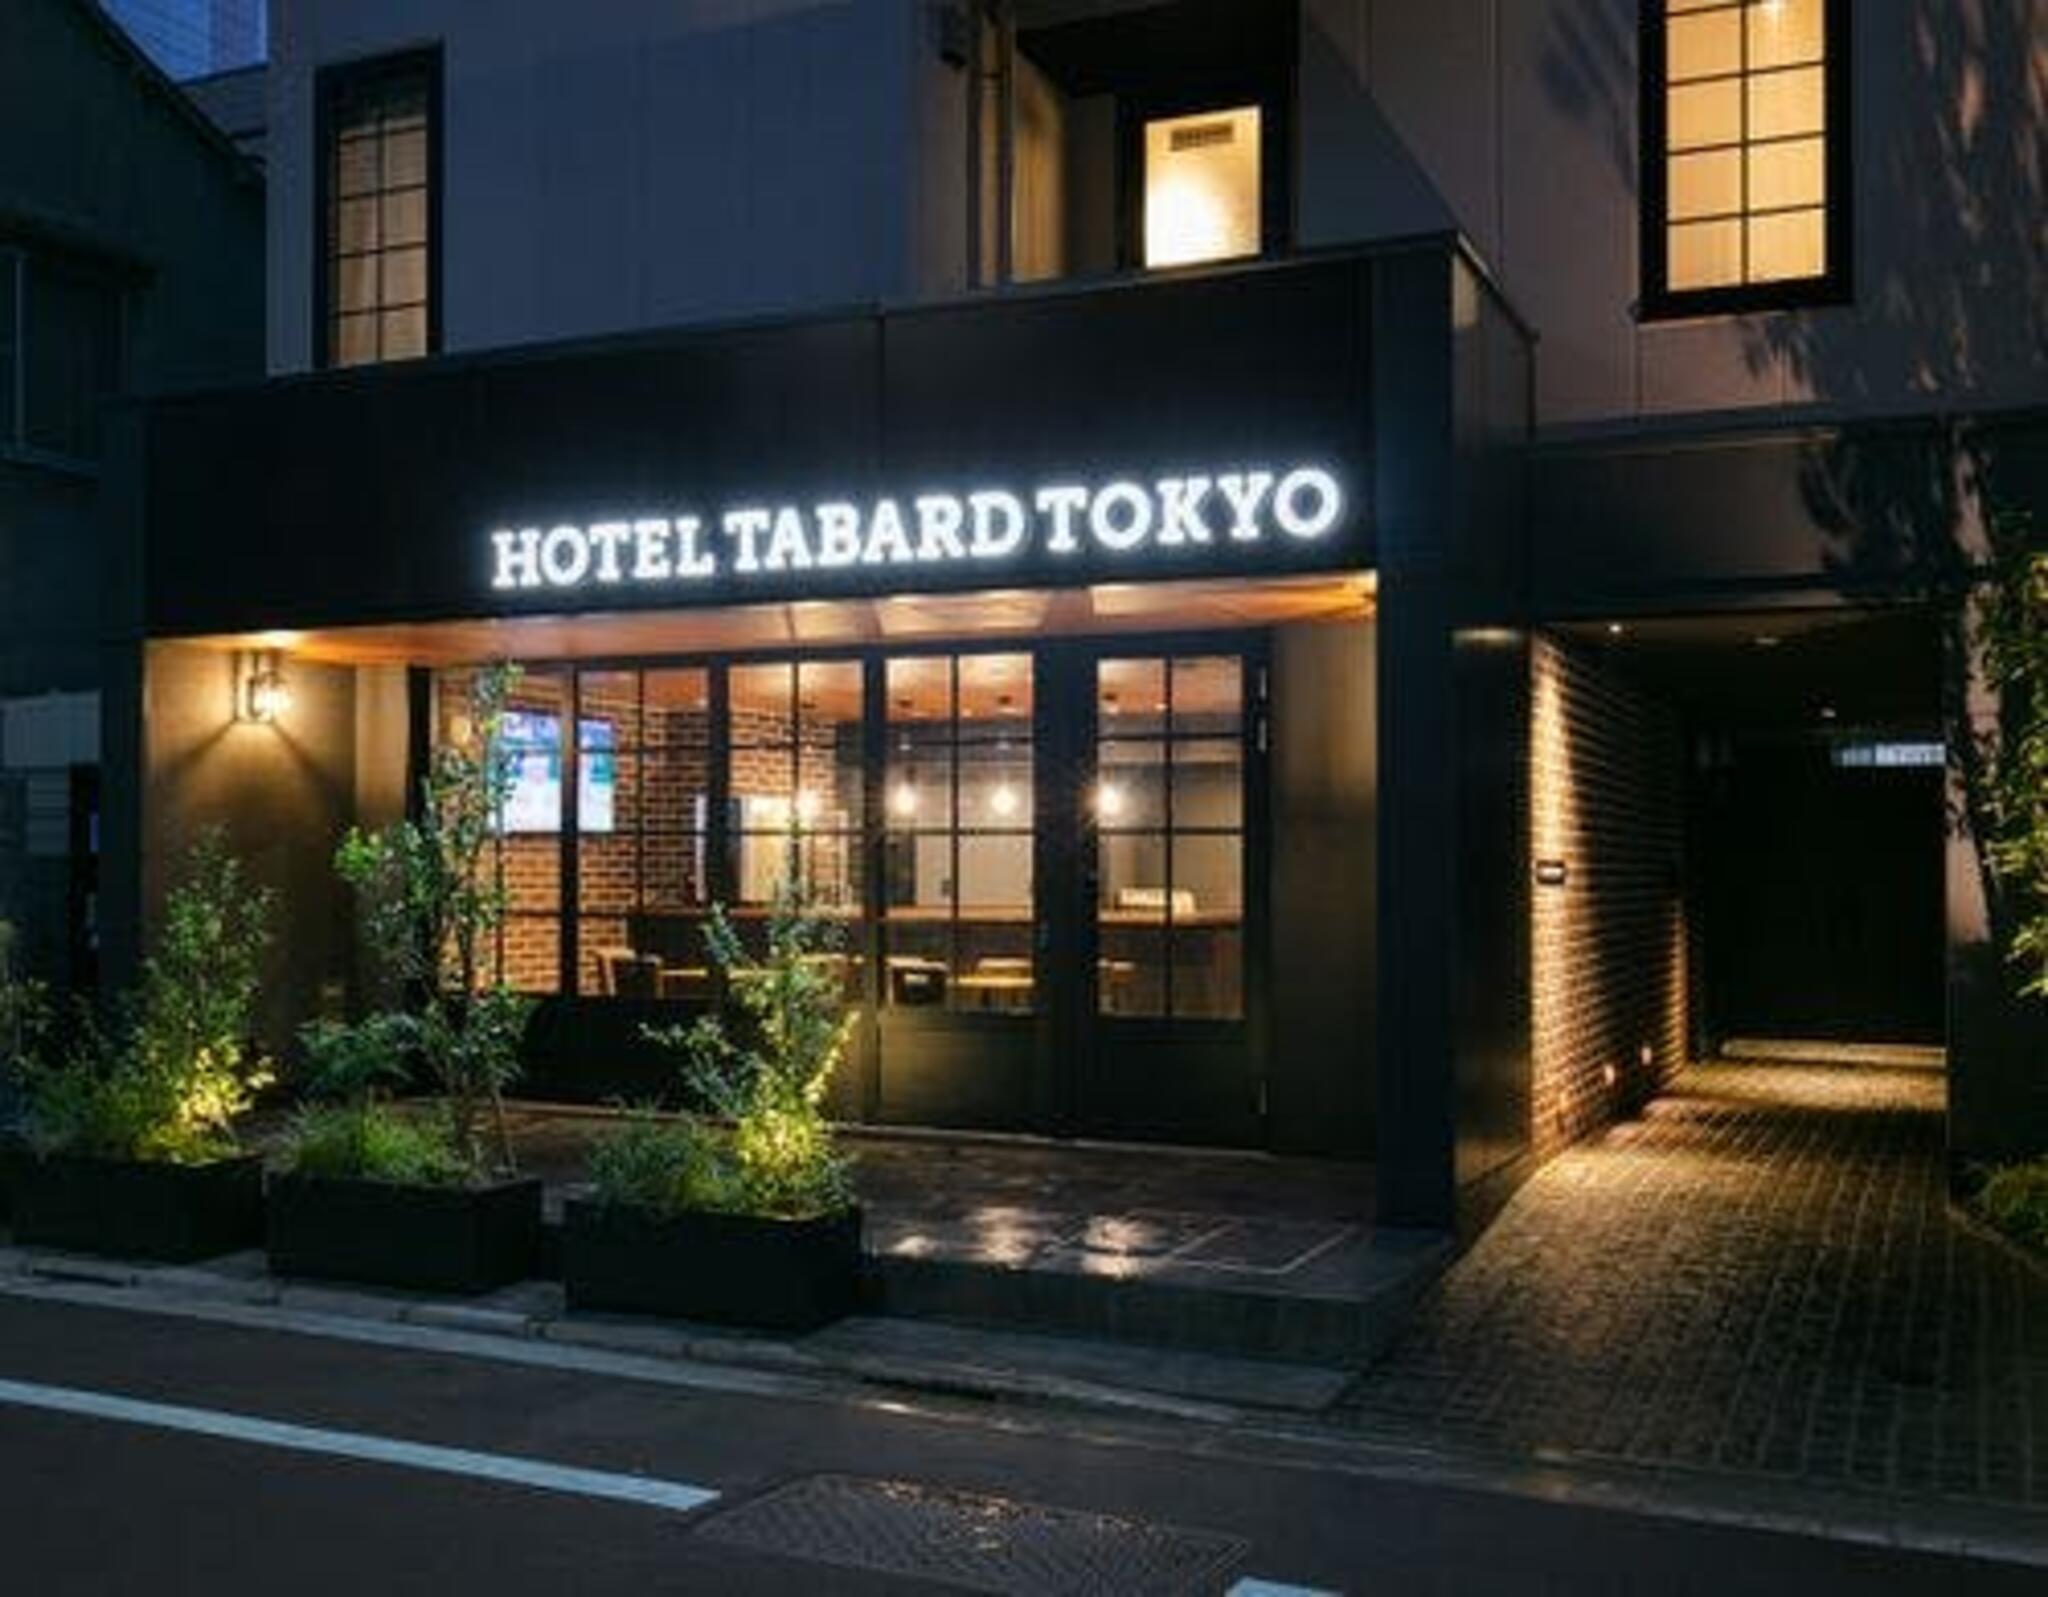 HOTEL TABARD TOKYOの代表写真1